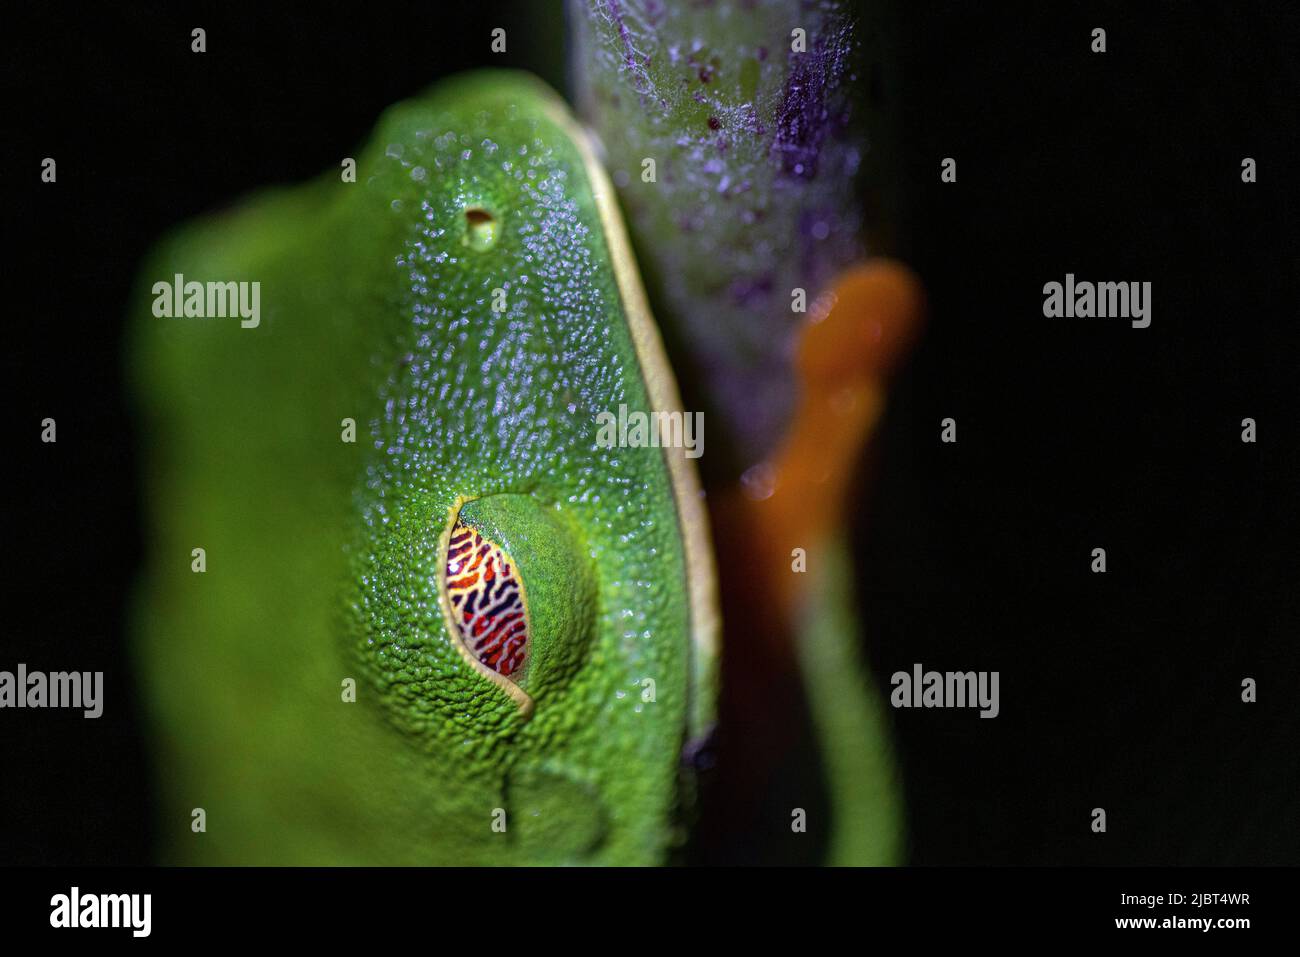 Costa Rica, Limon Province, Tortuguero National Park, Red-eyed tree frog (Agalychnis callidryas) Stock Photo